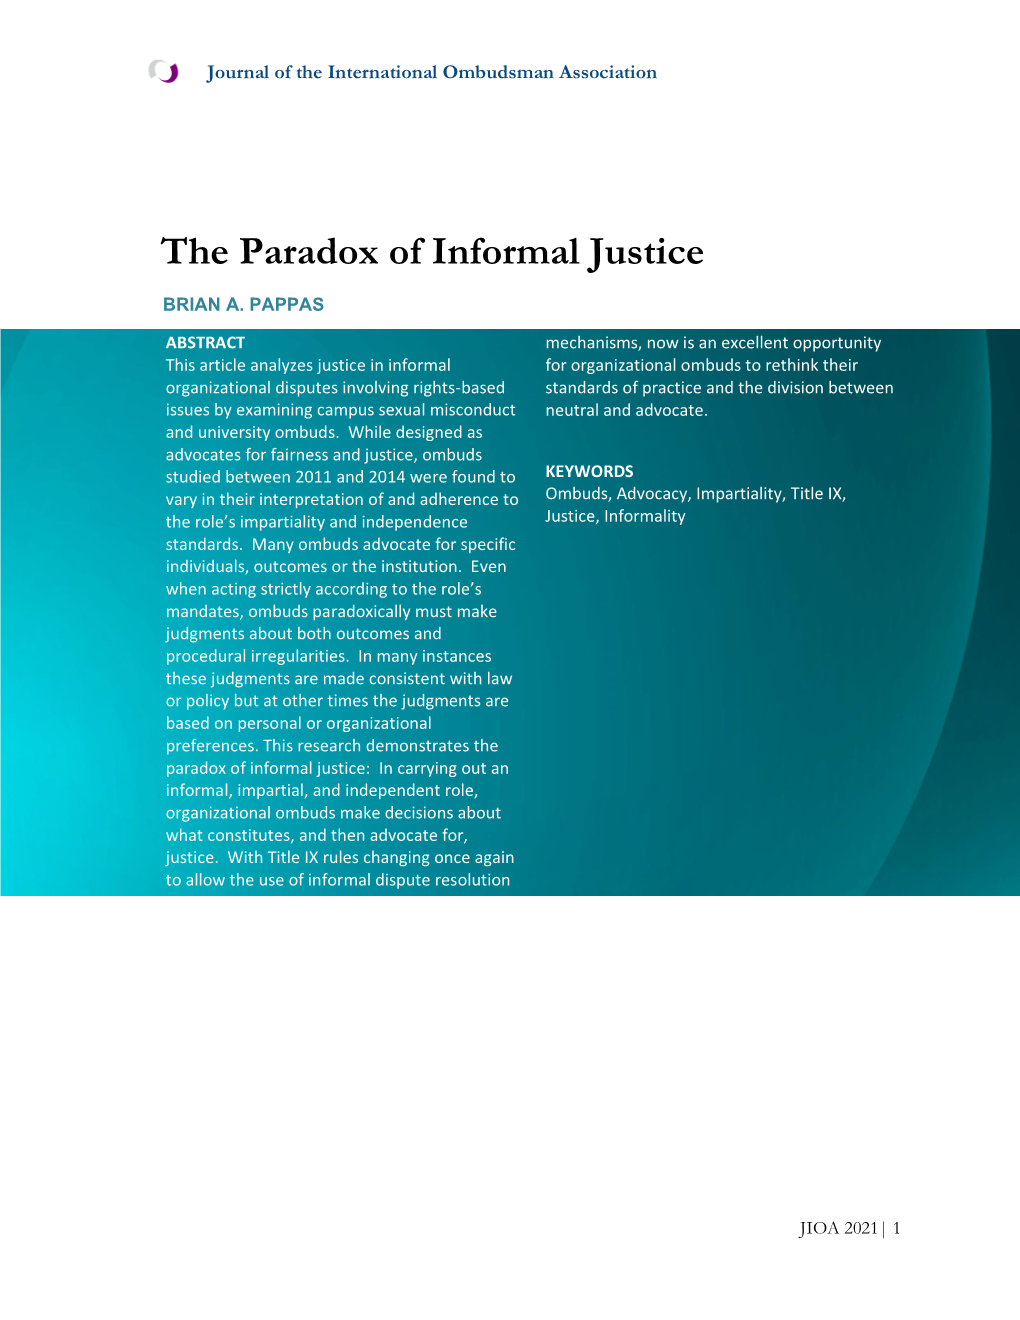 The Paradox of Informal Justice